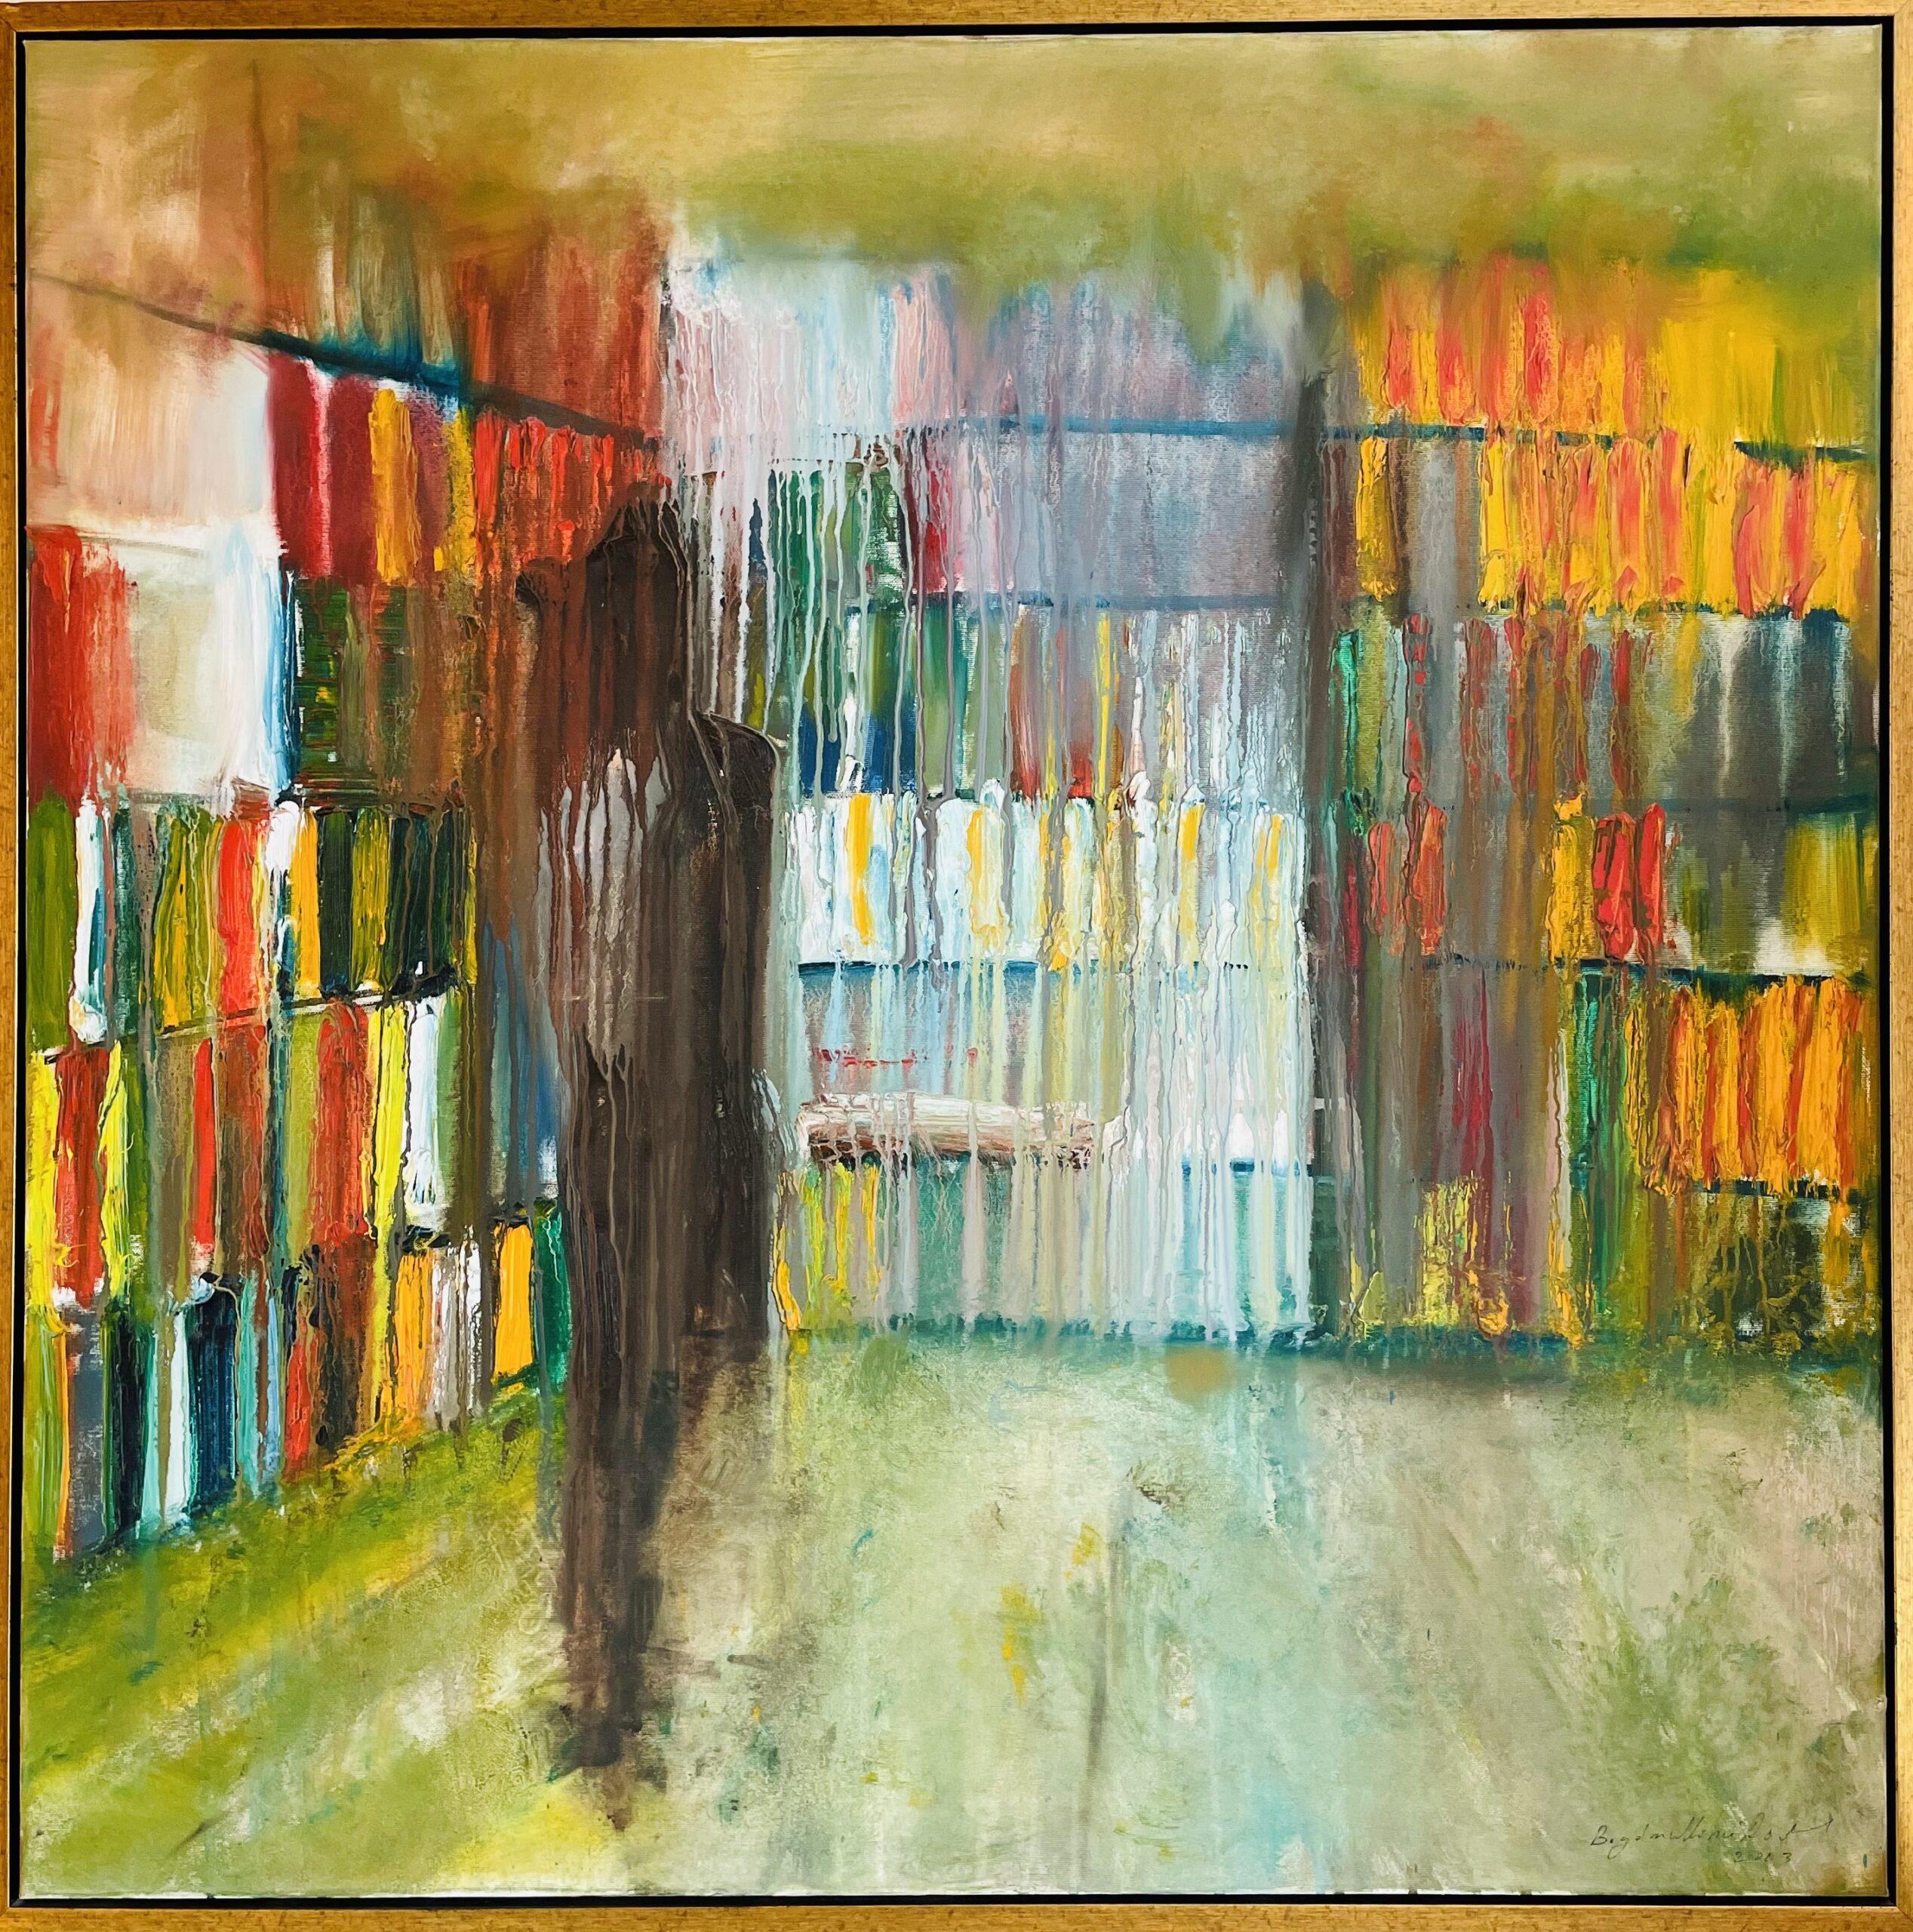 Fantoma din biblioteca 2013, Bogdan Mihai Radu